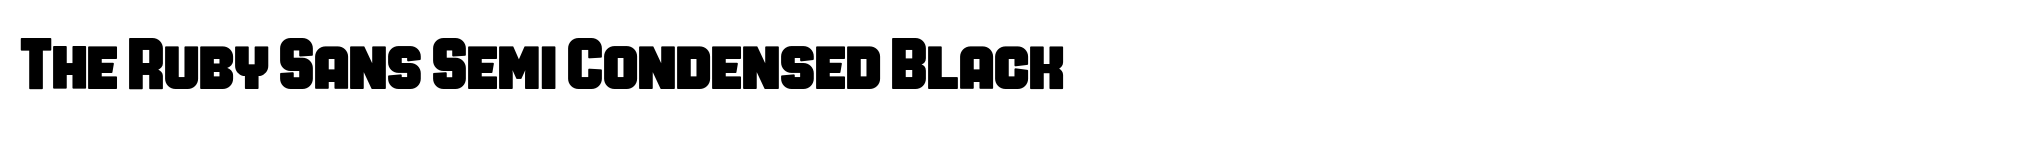 The Ruby Sans Semi Condensed Black image